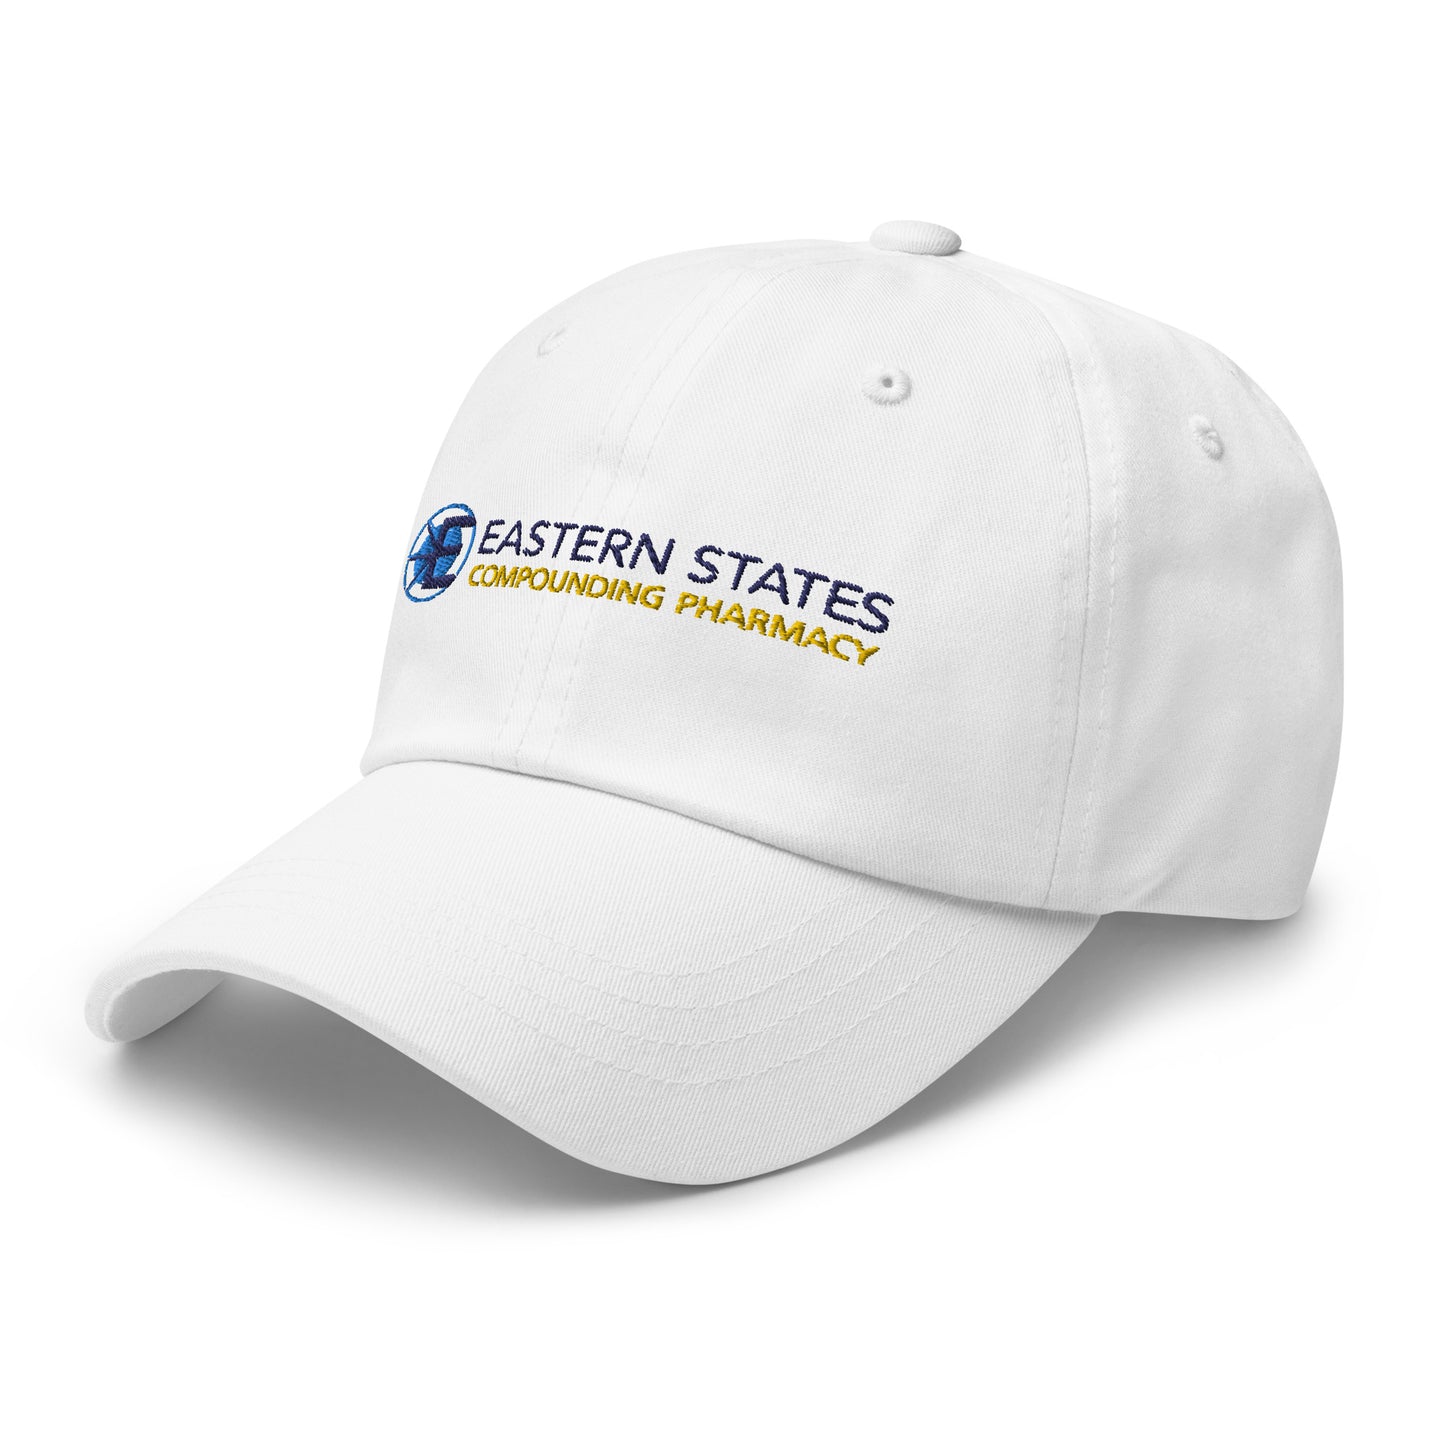 Dad hat - Eastern States